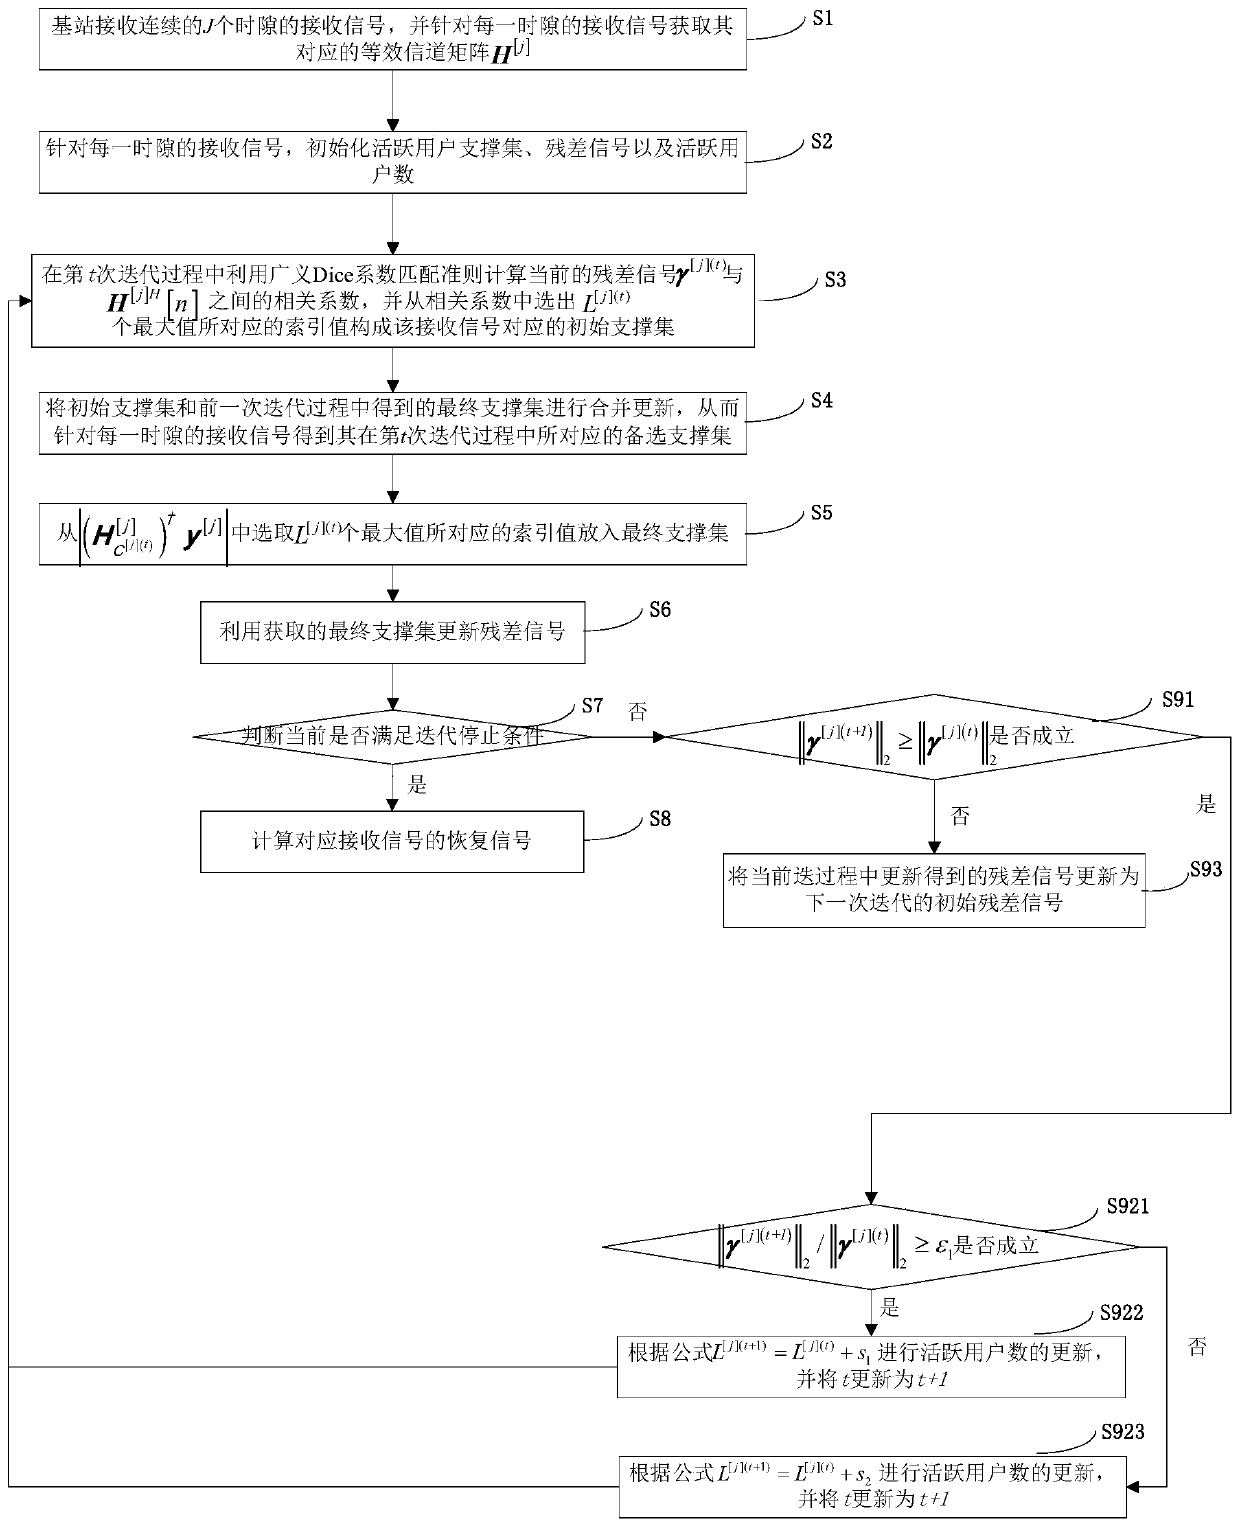 Multi-user detection method of non-orthogonal multiple access system based on compressed sensing